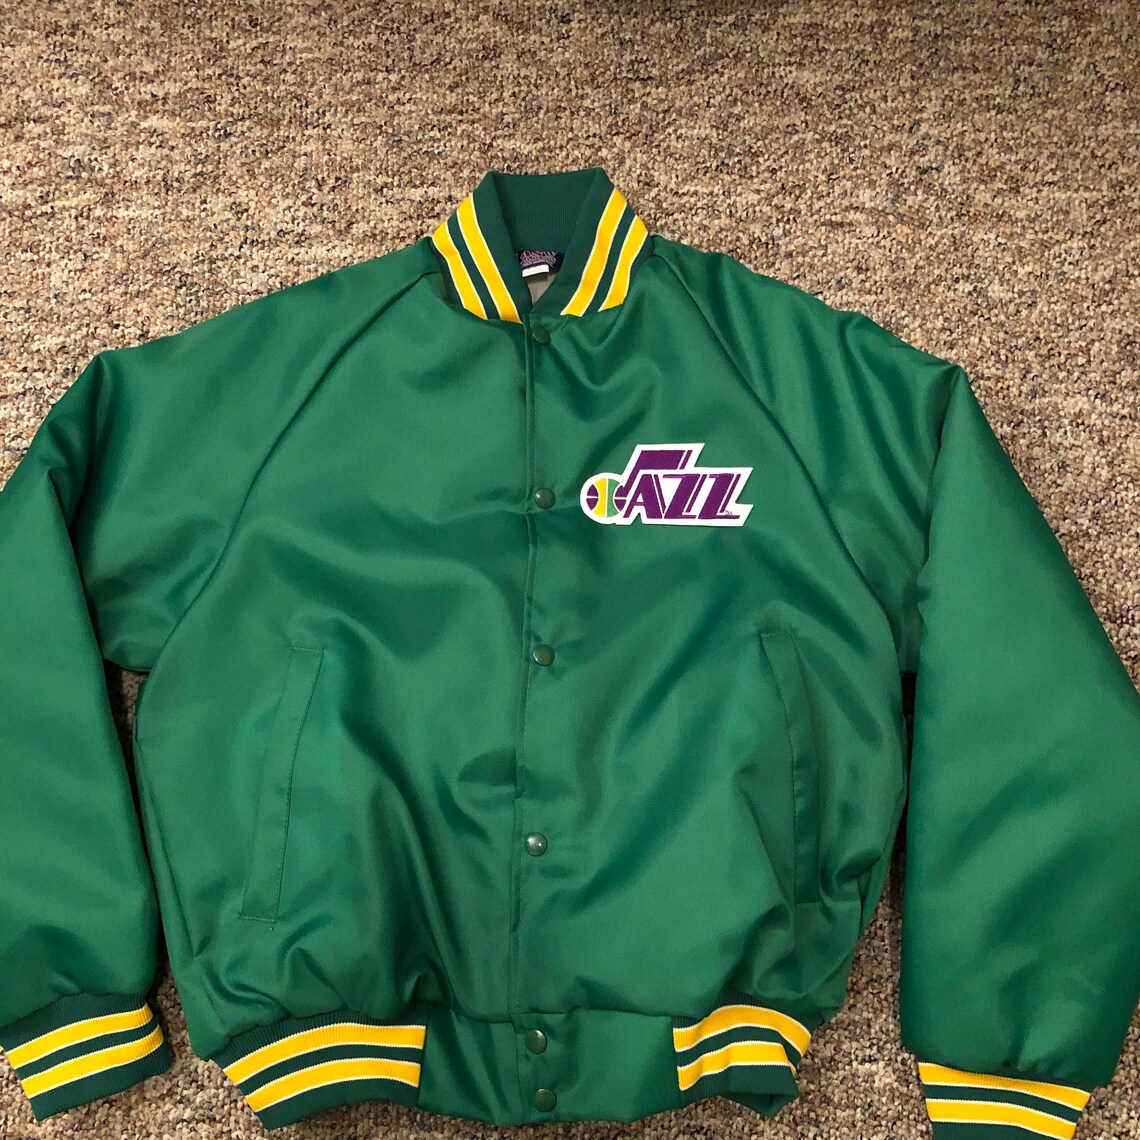 Utah Jazz Vintage Satin Jacket | Etsy